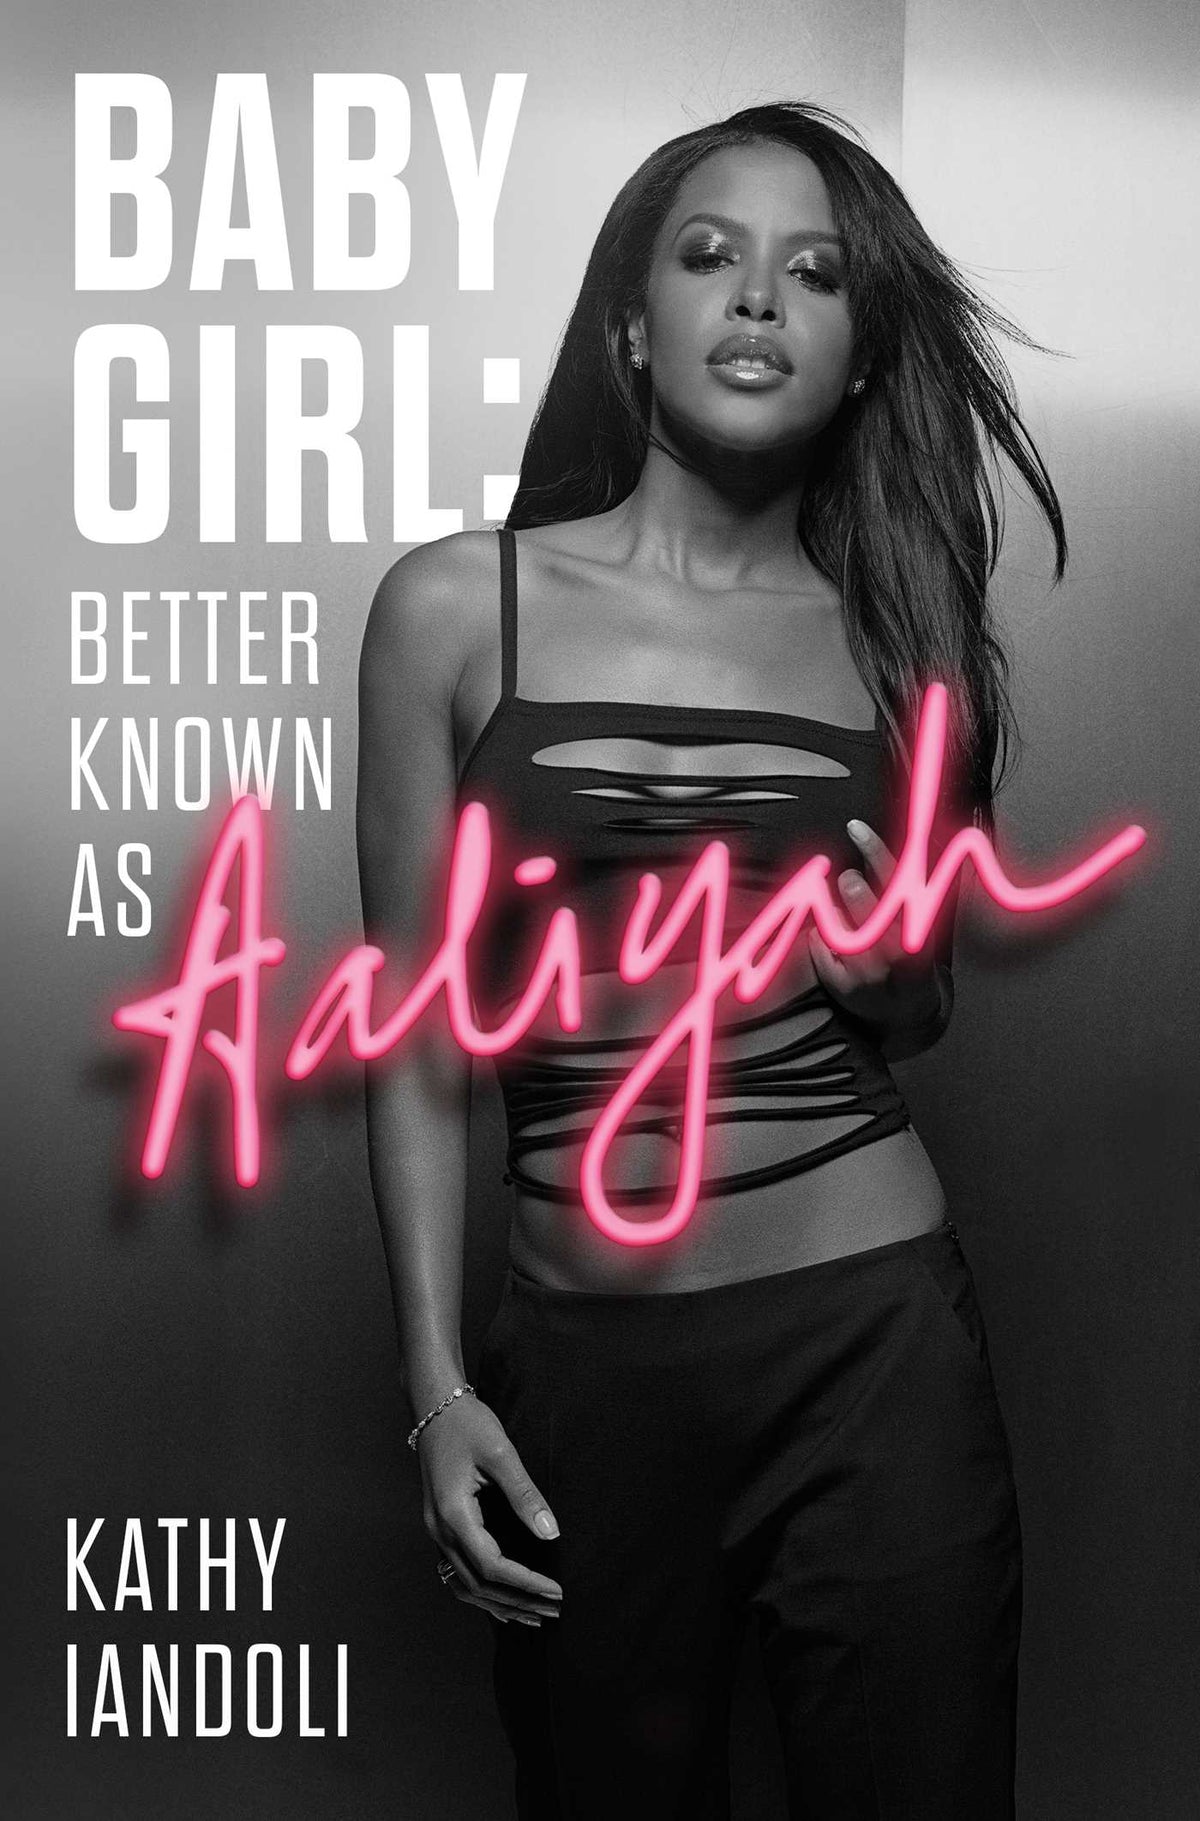 Baby Girl: Better Known As Aaliyah;  Kathy Iandoli